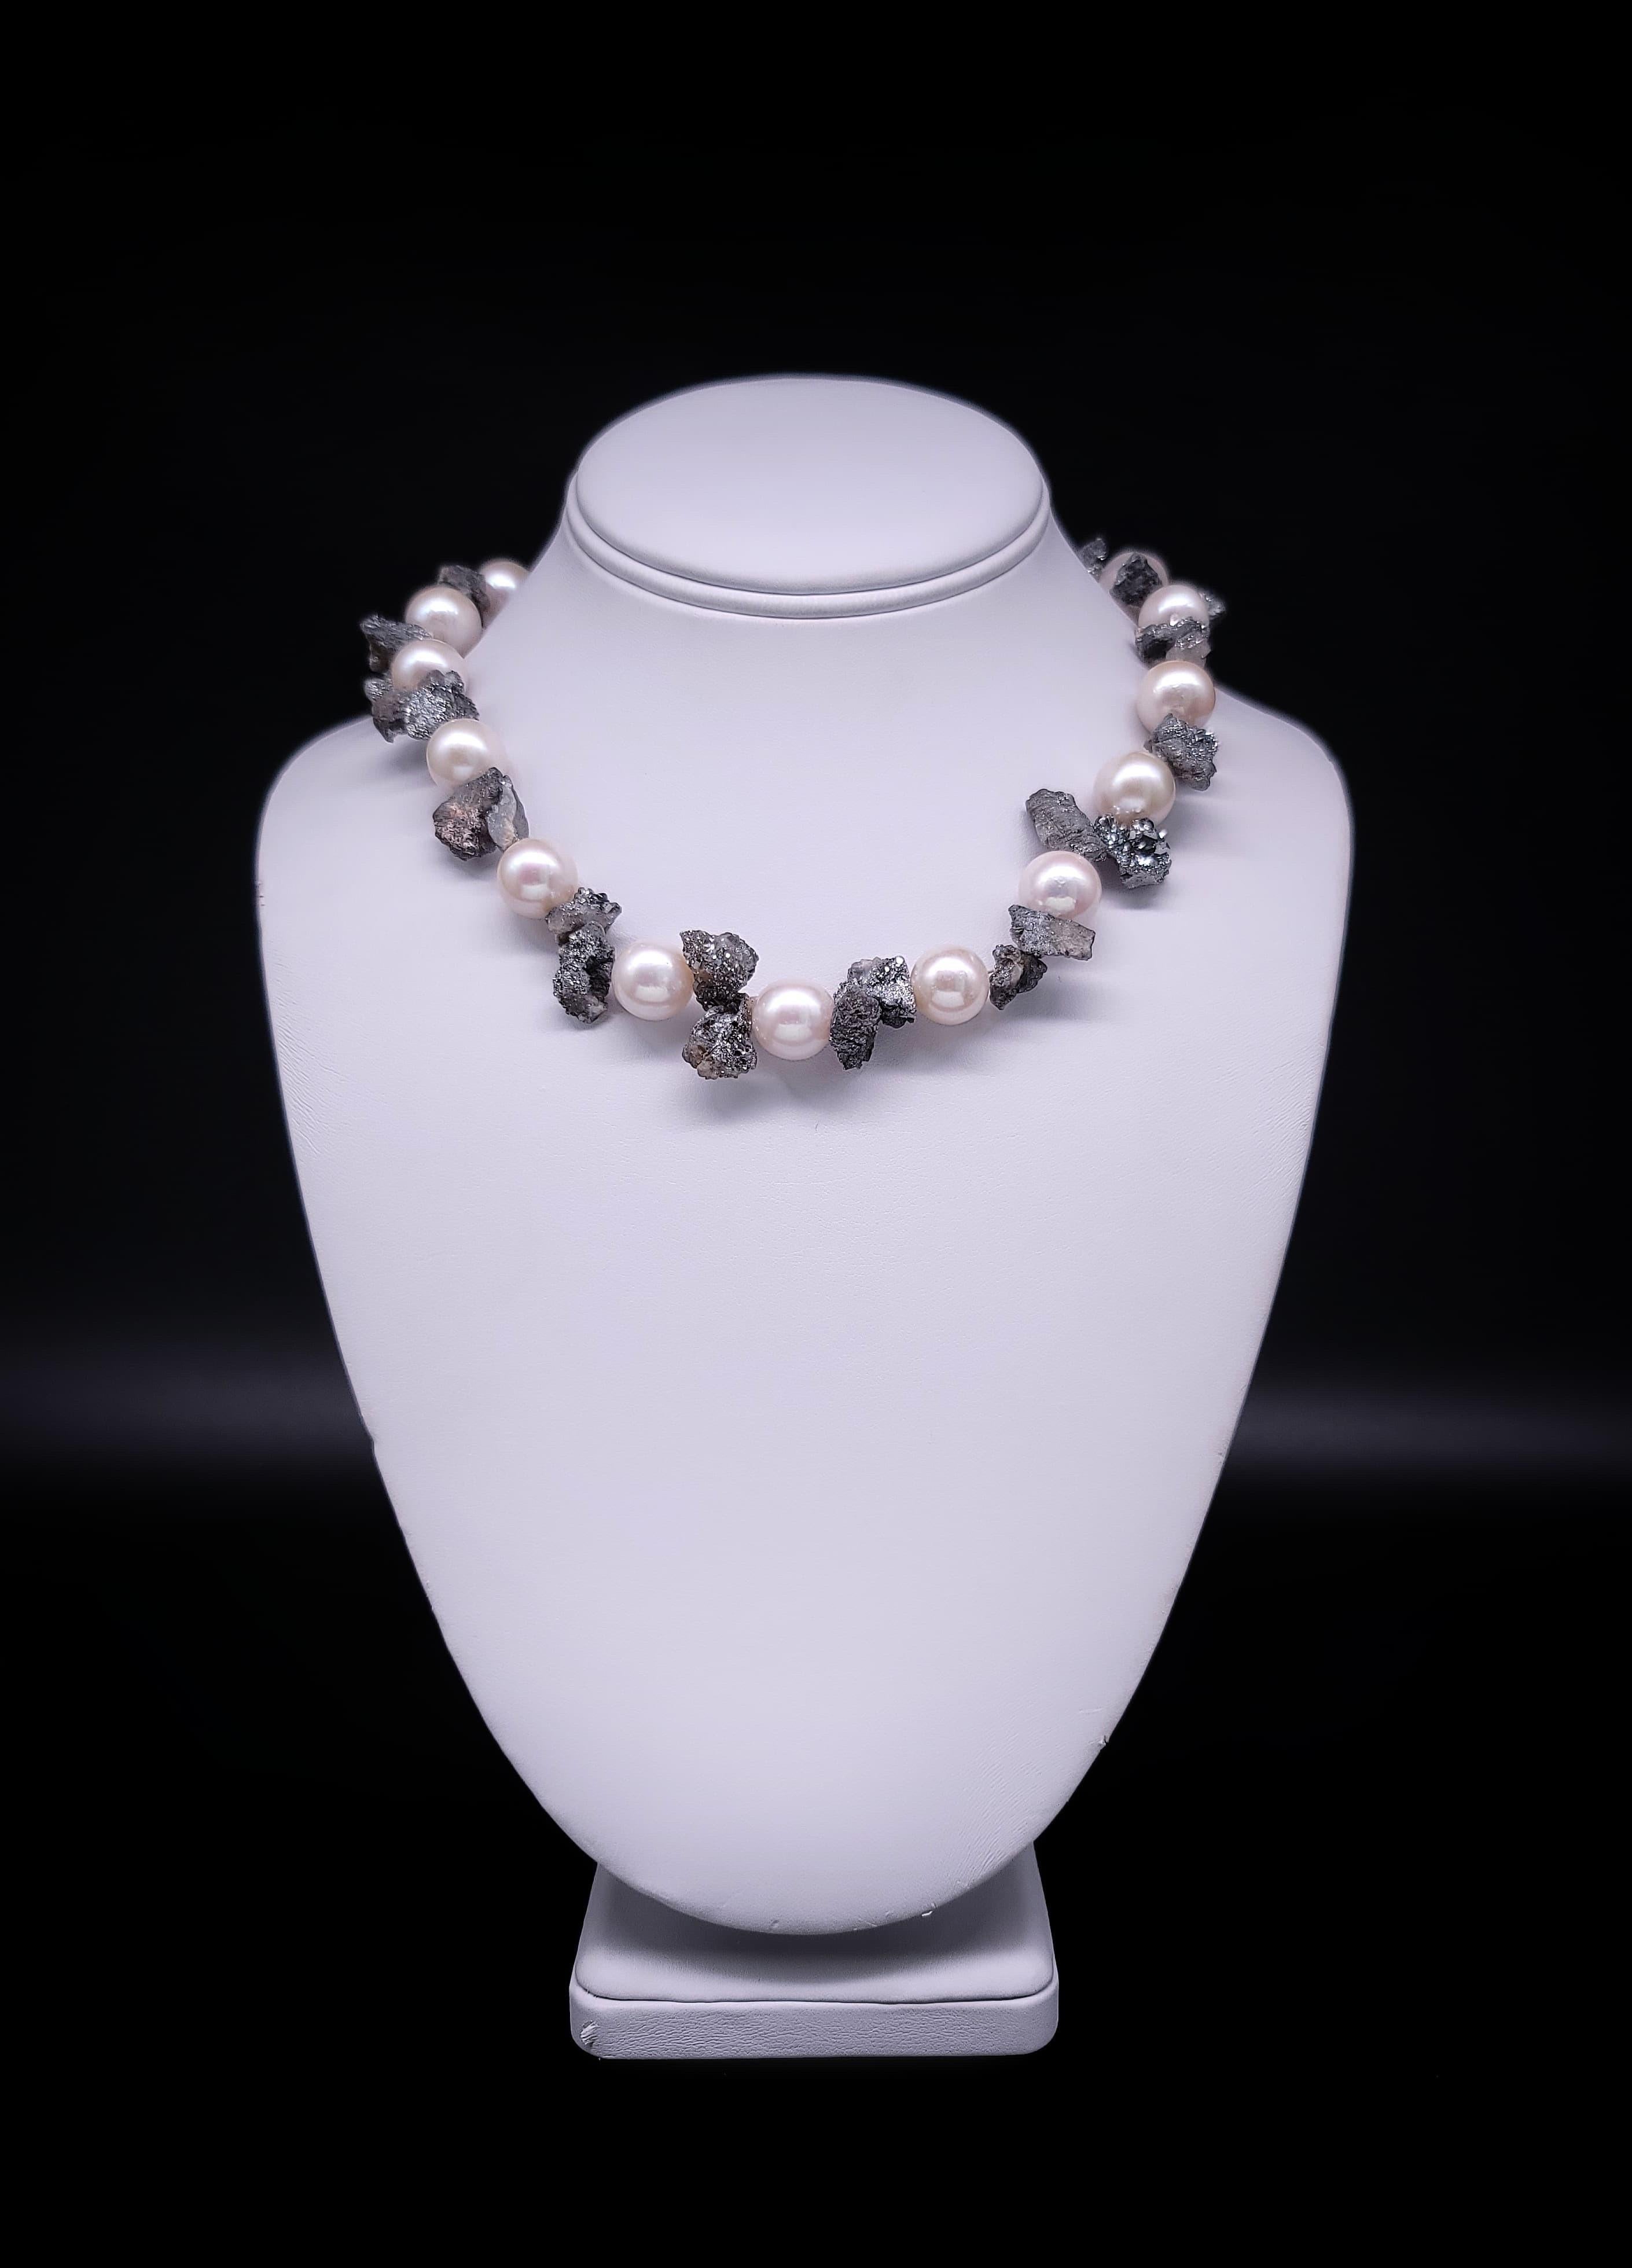 Mixed Cut A.Jeschel  Lustrous 14mm pearls and sparkly druzy Quartz necklace. For Sale